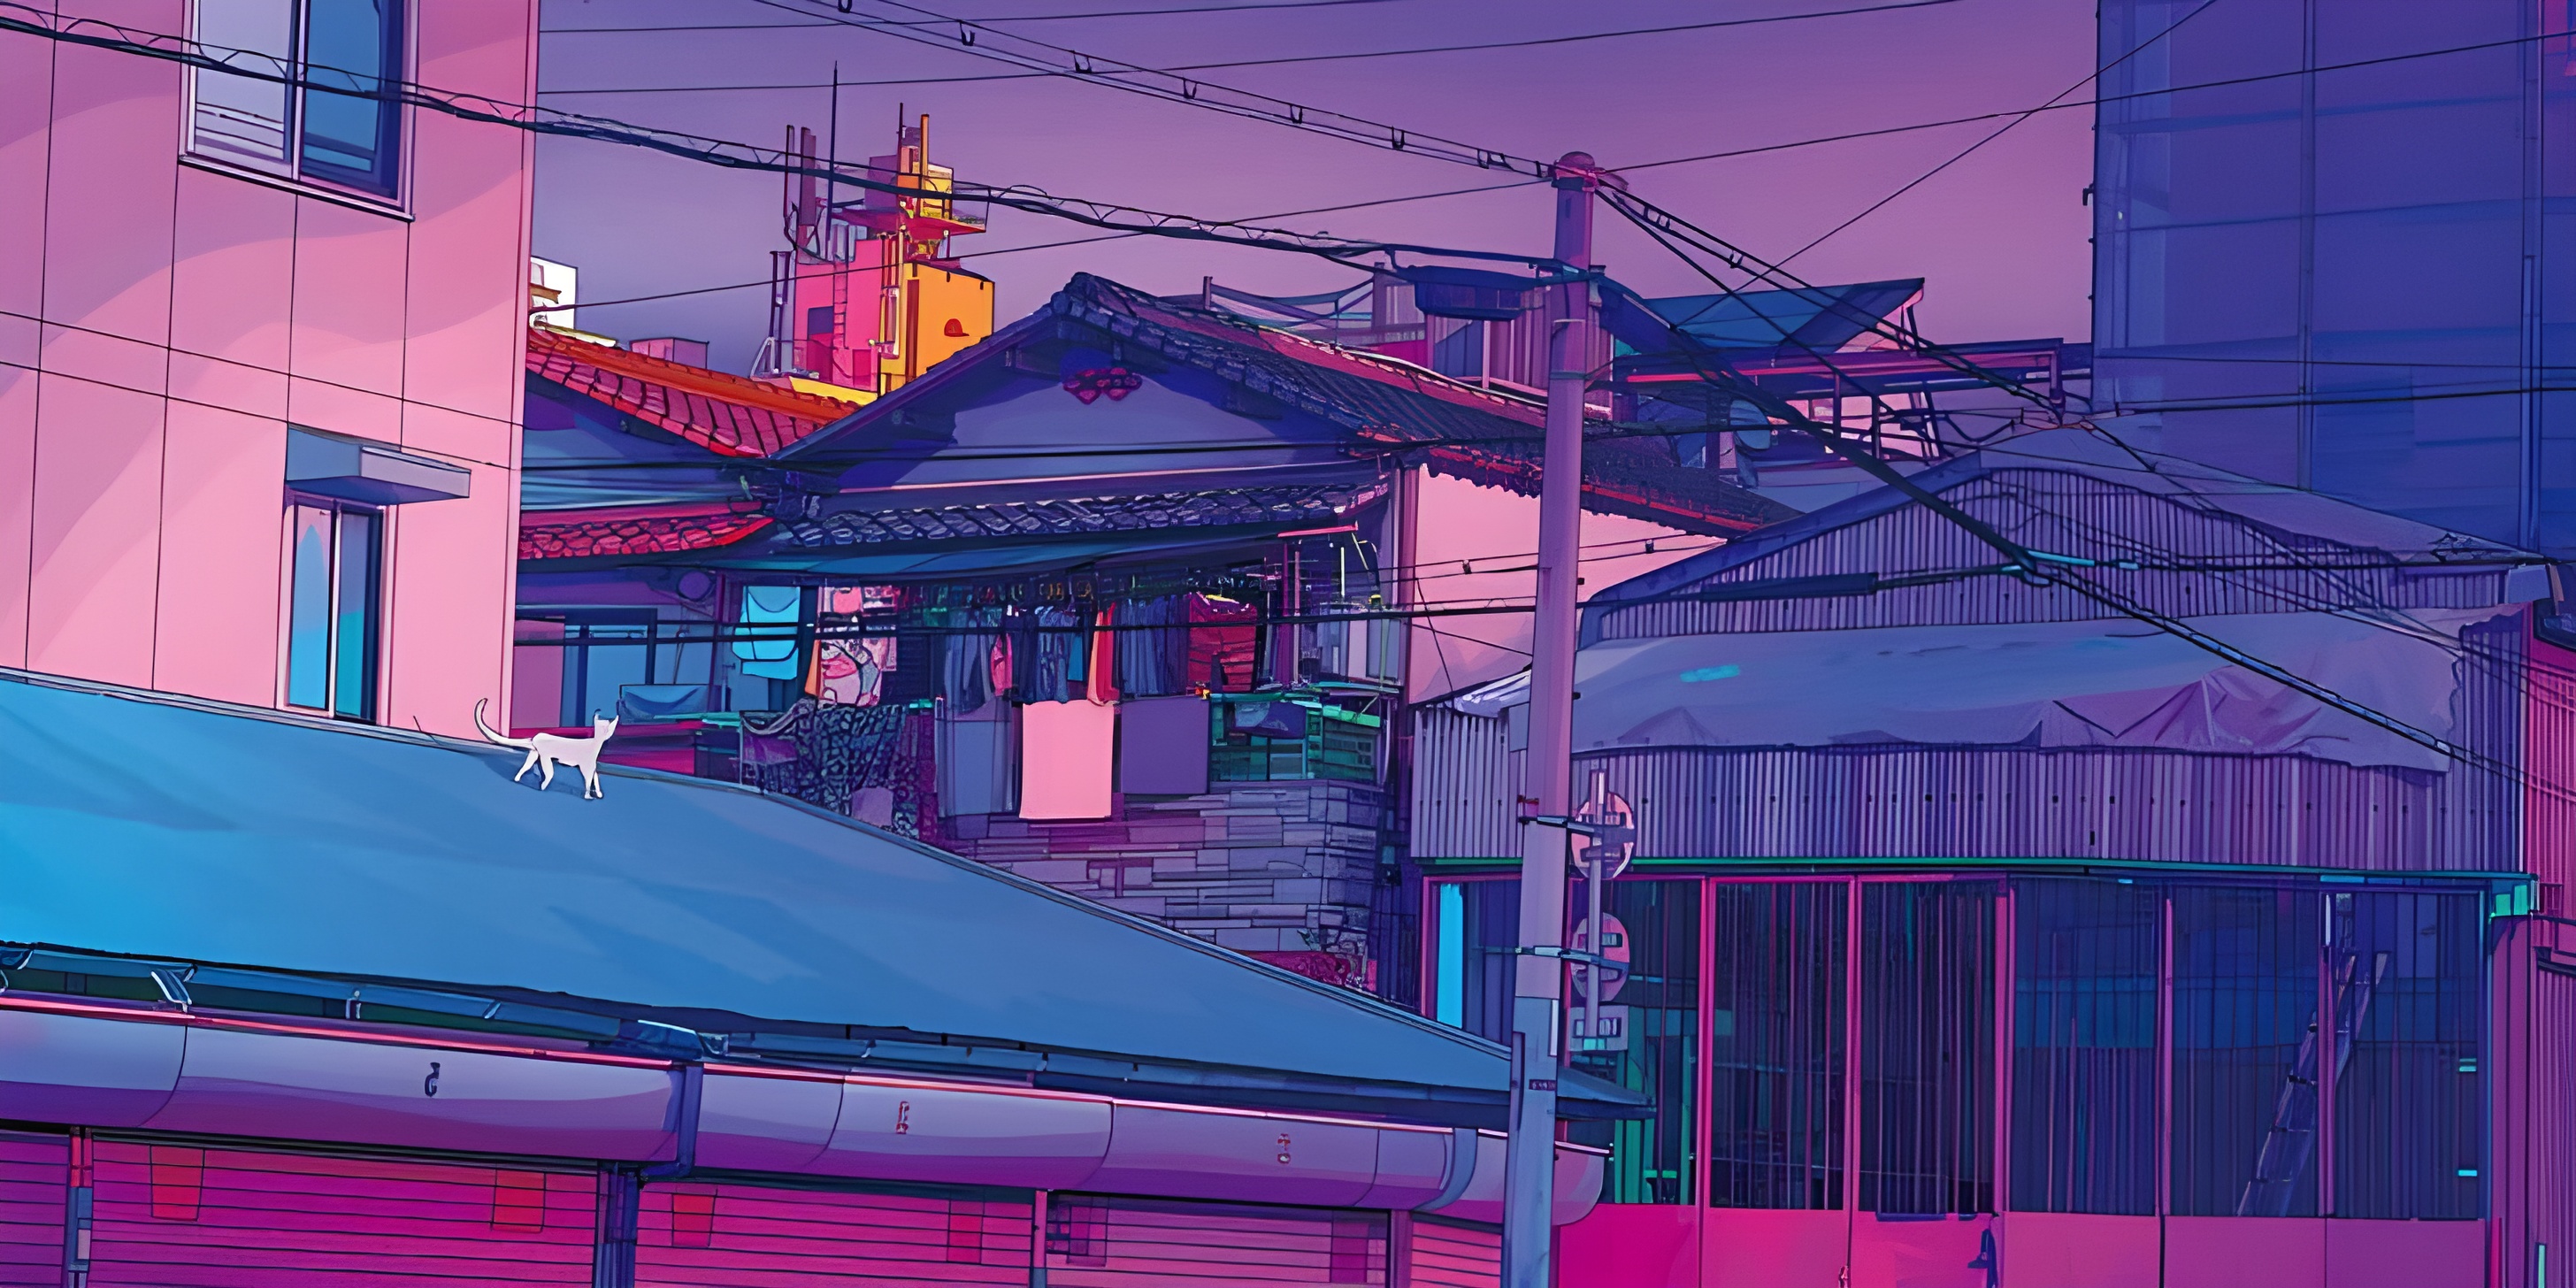 Wallpaper Anime, Aesthetics, Japanese Aesthetics, Art, Building, Background Free Image